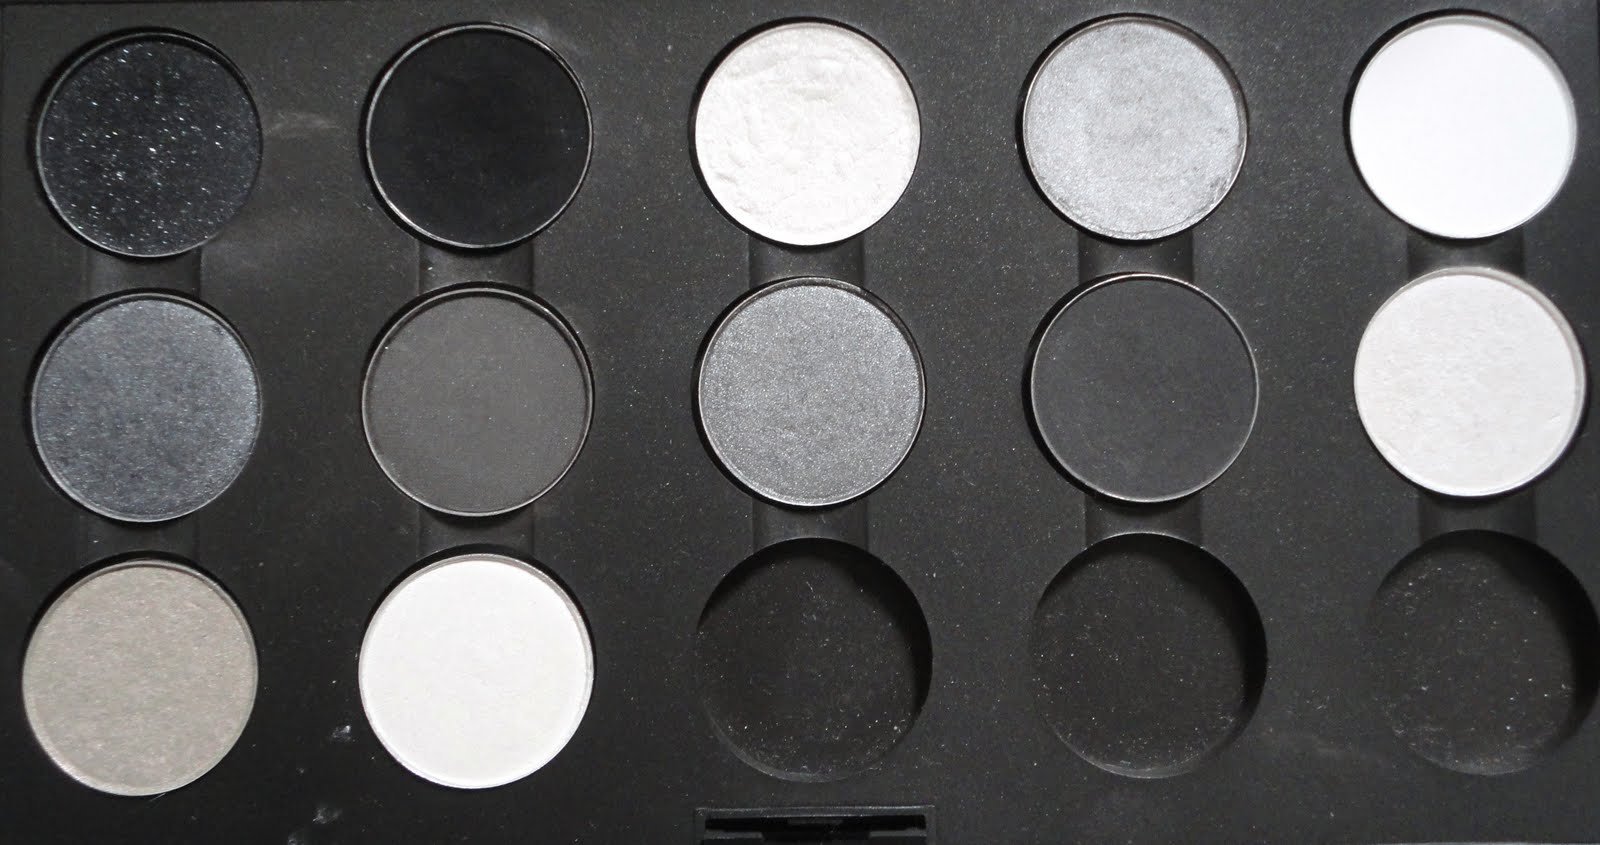 black and grey eyeshadow palette